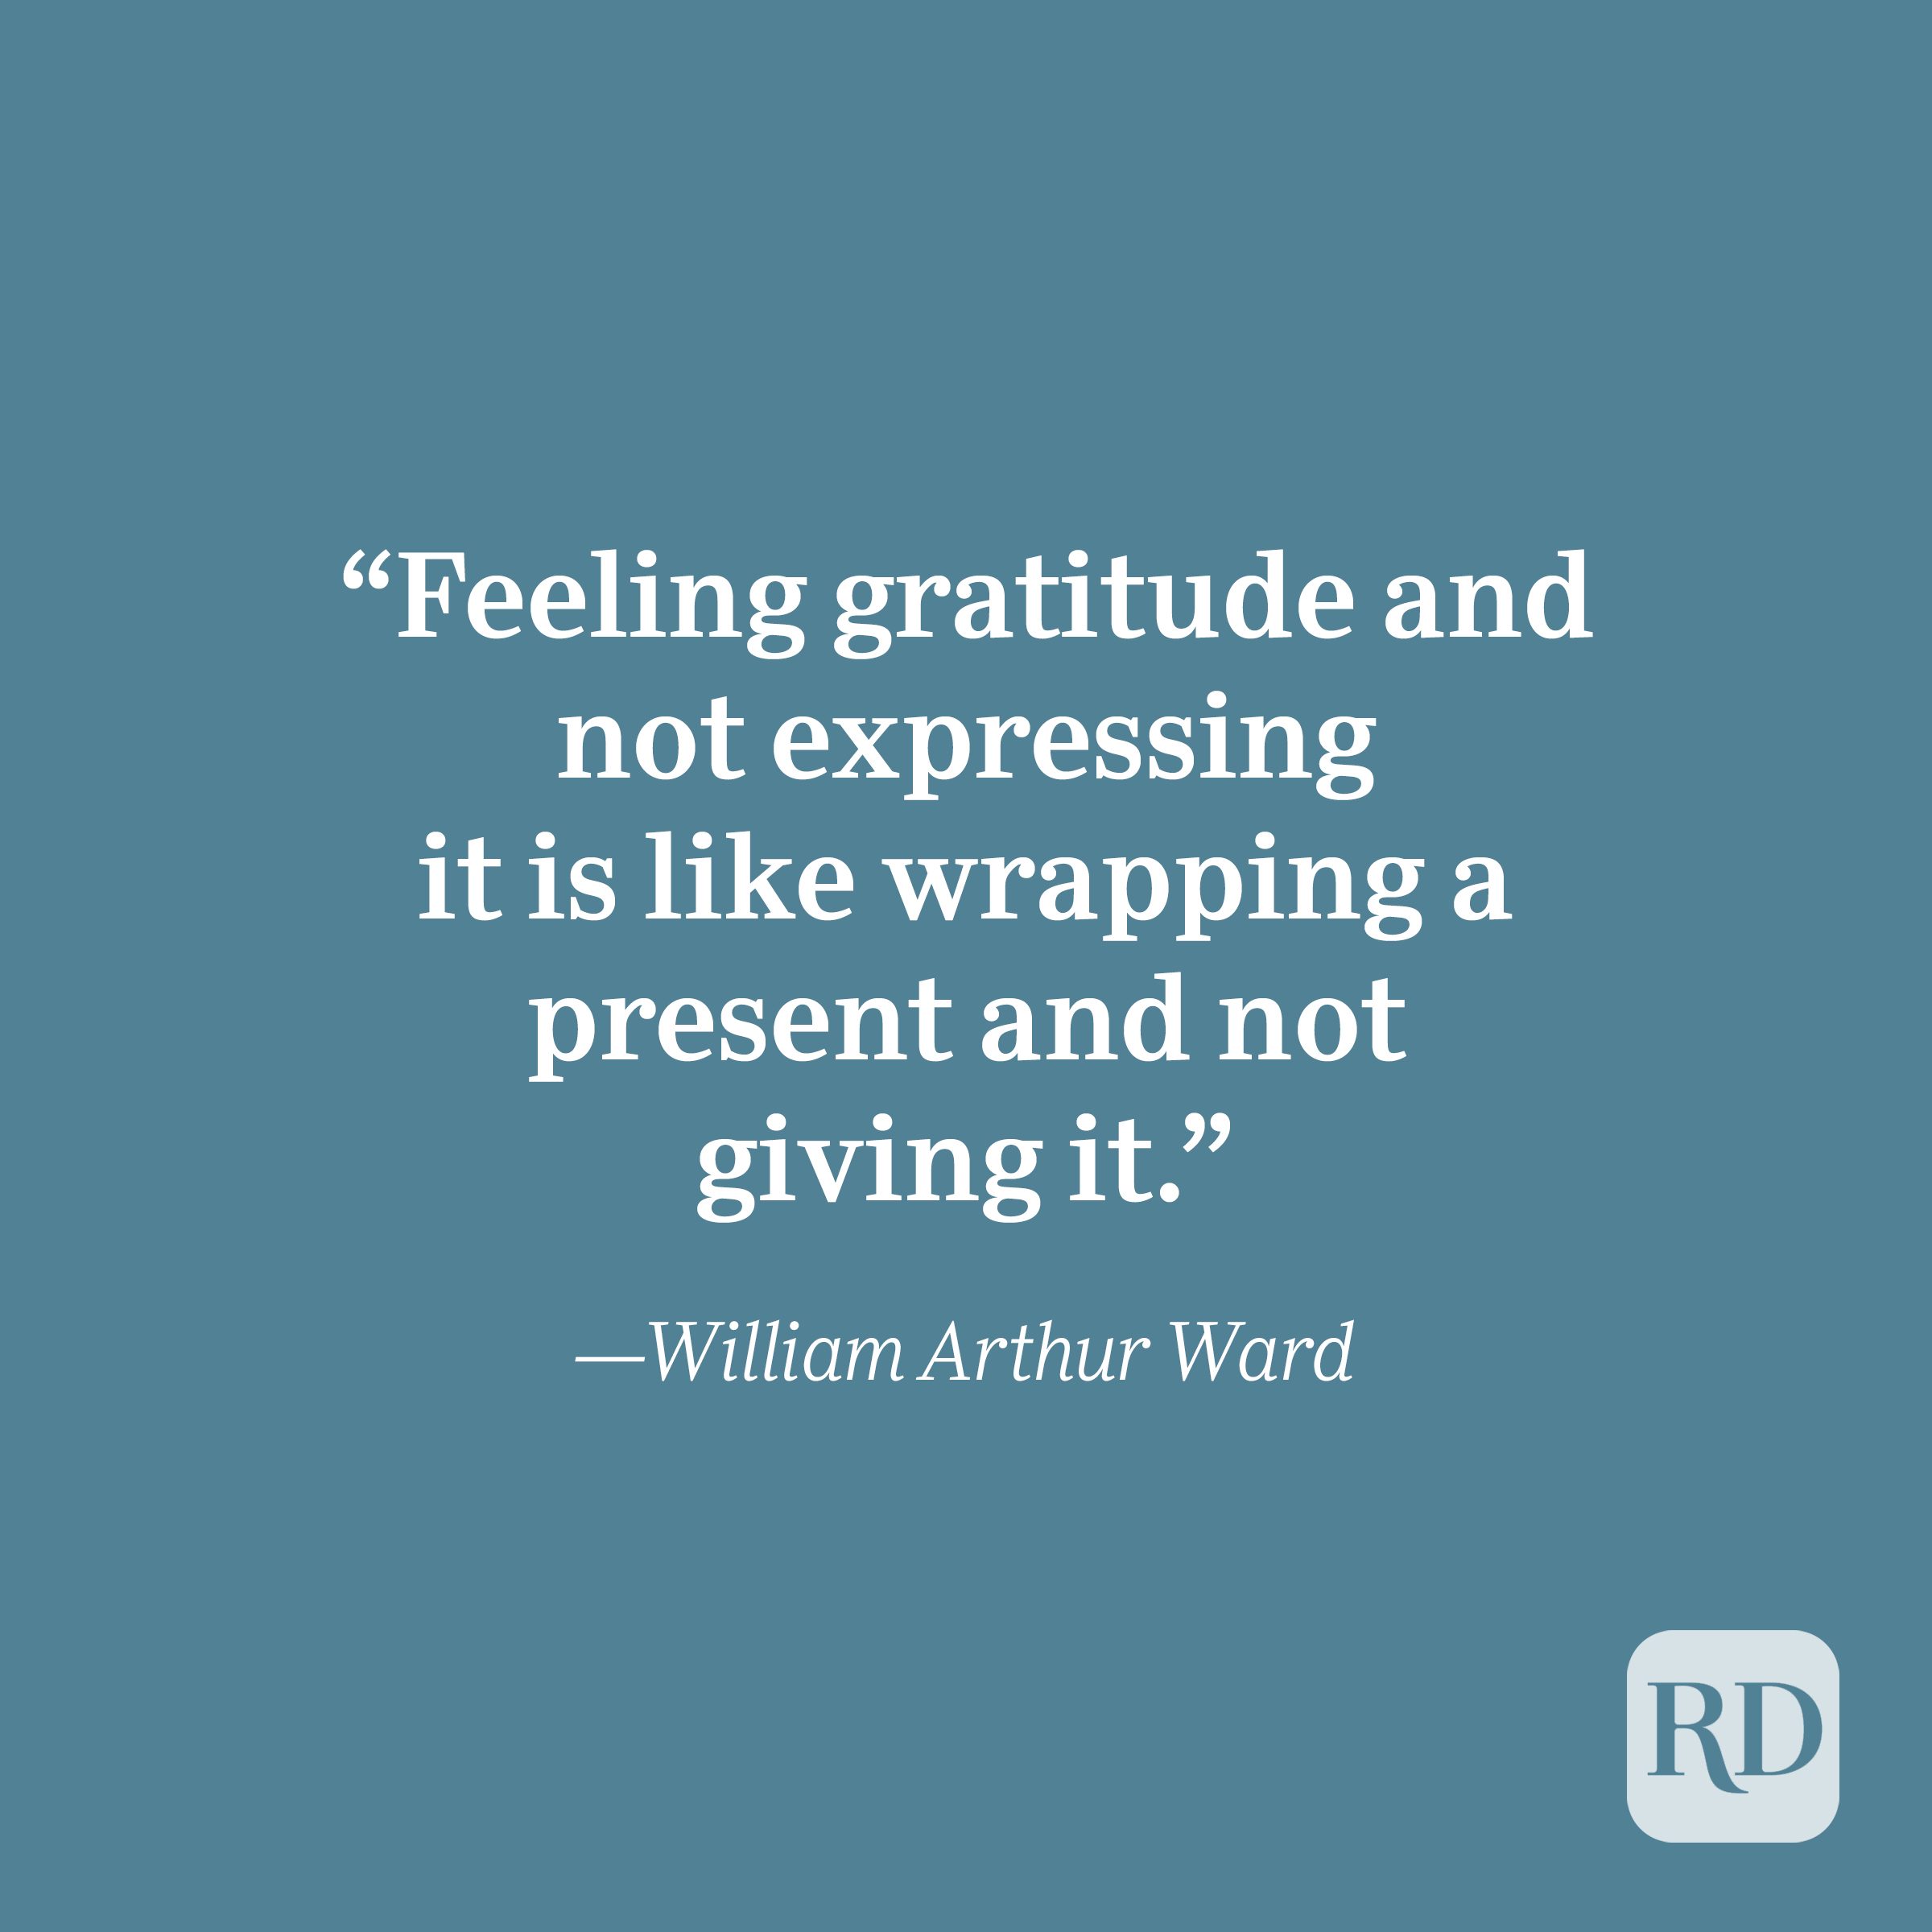 William Arthur Ward quote about gratitude.